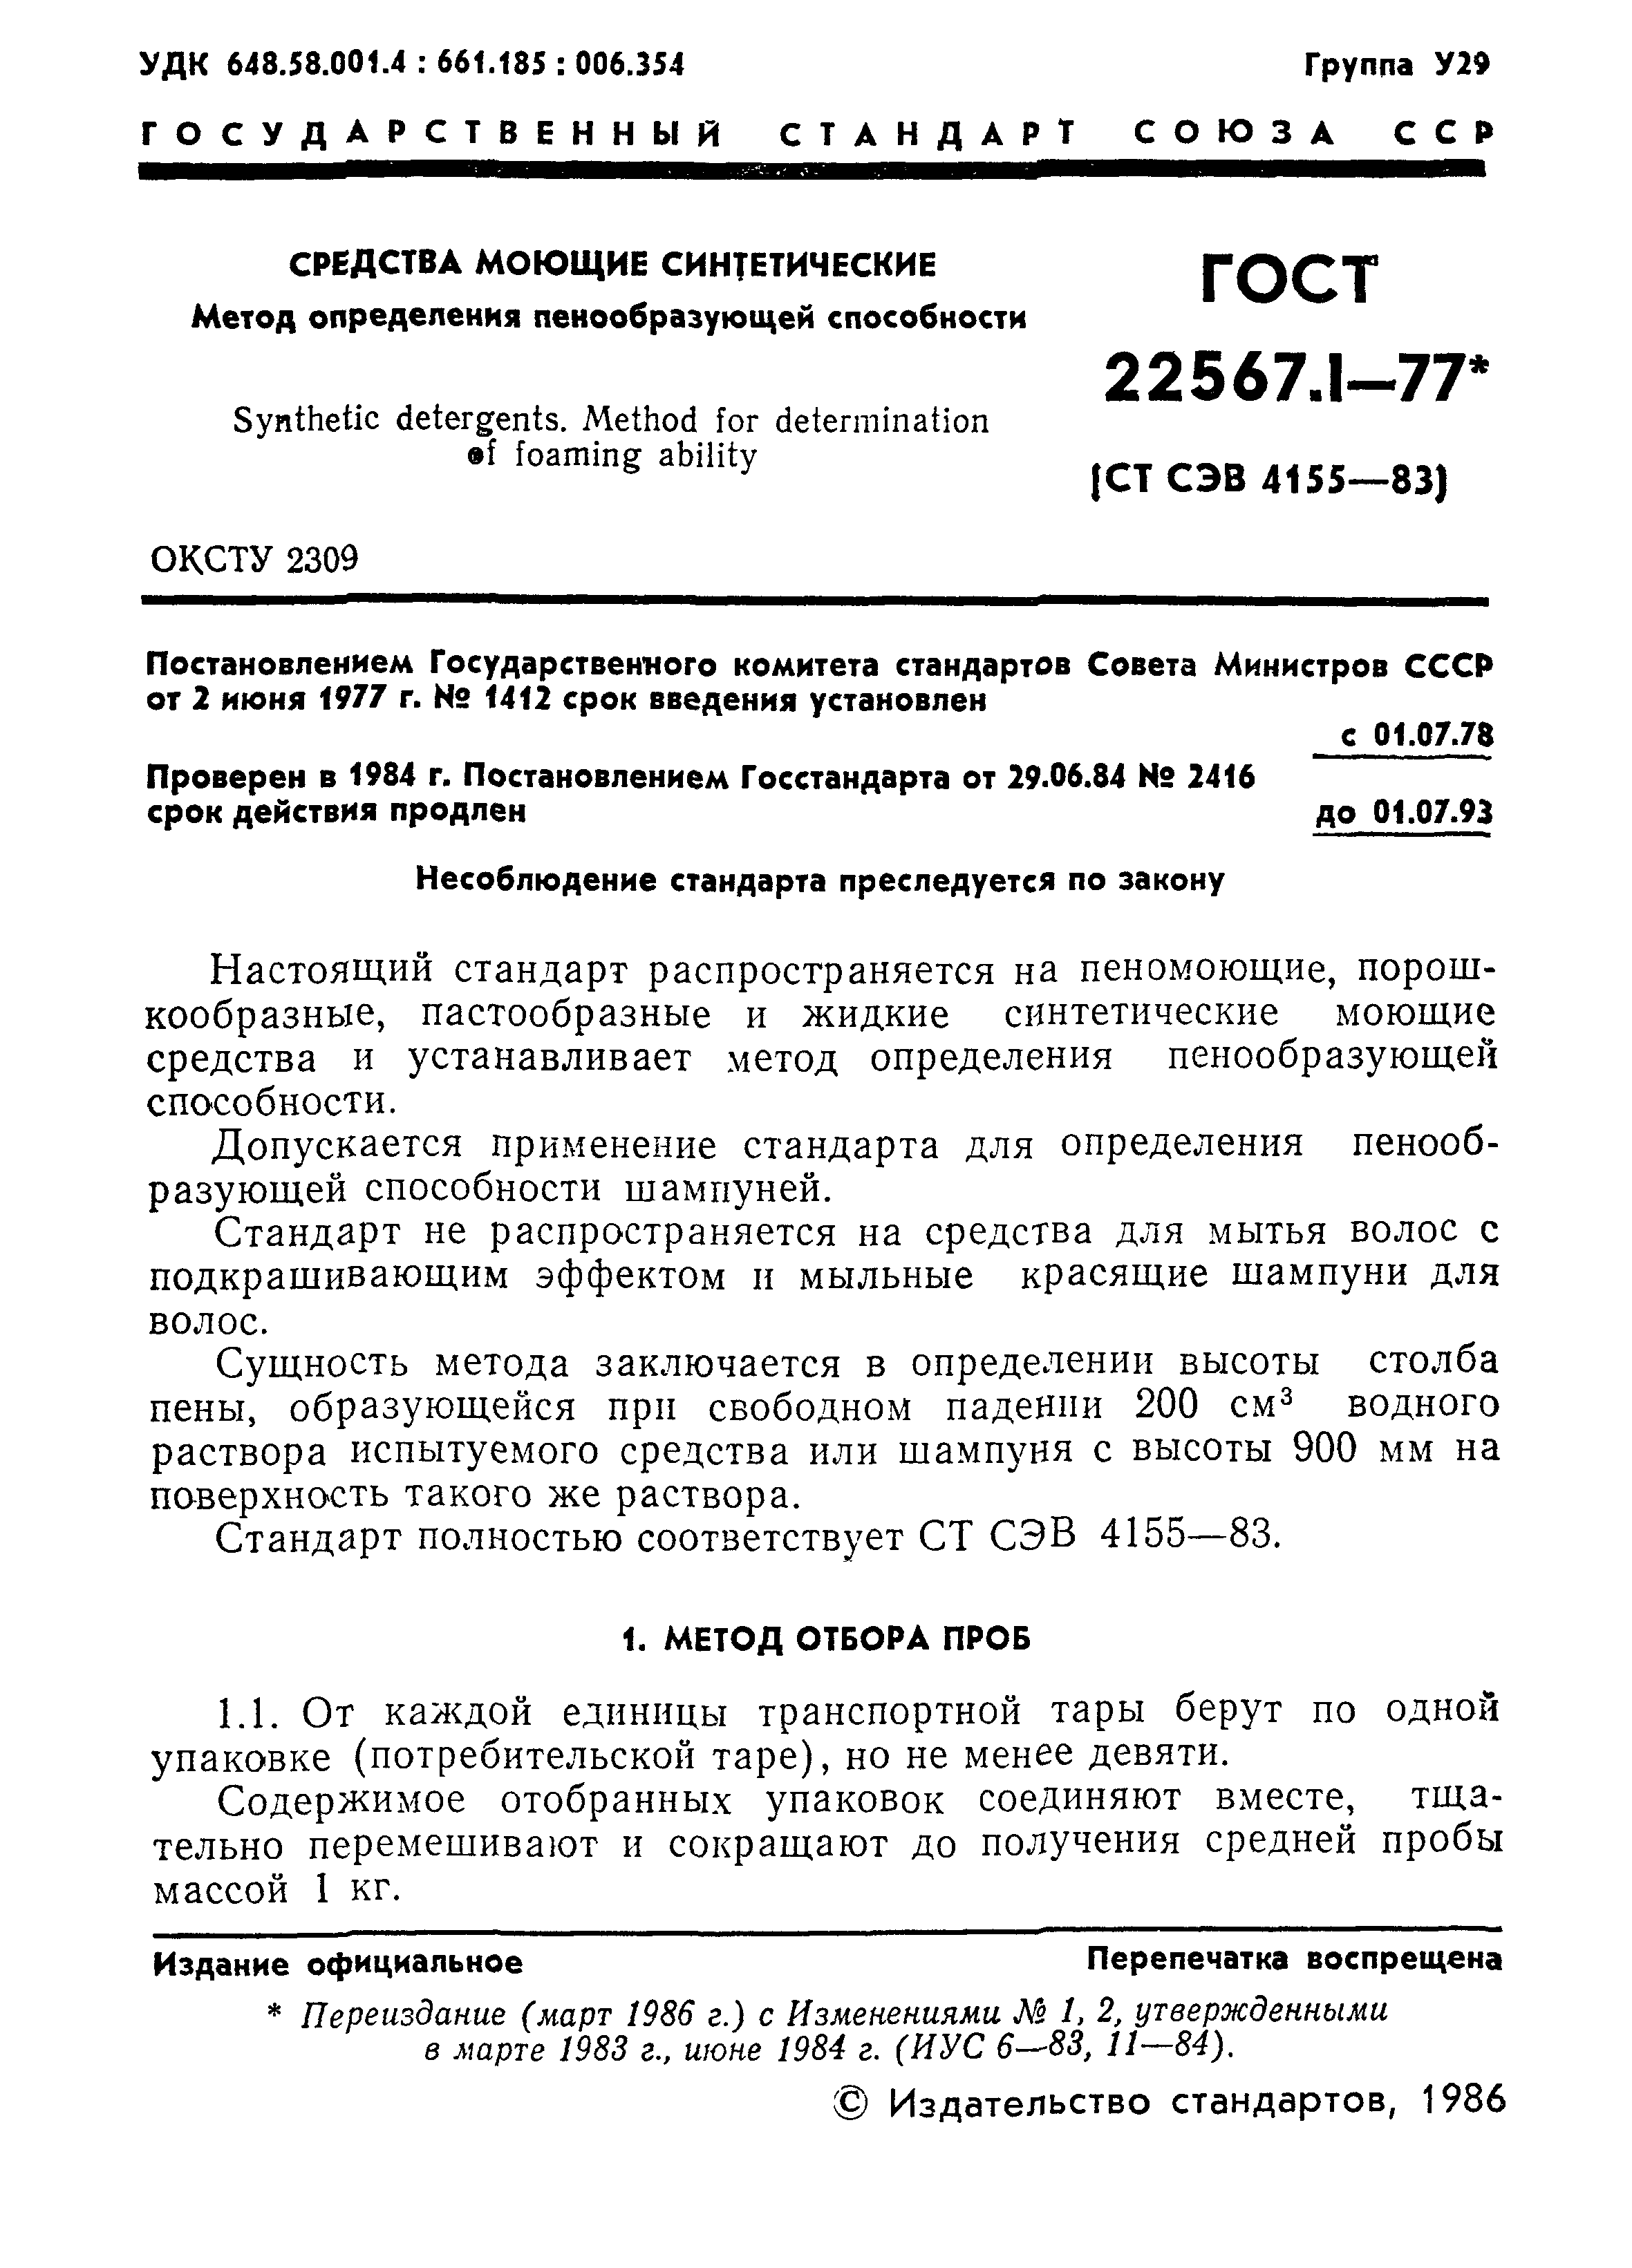 ГОСТ 22567.1-77